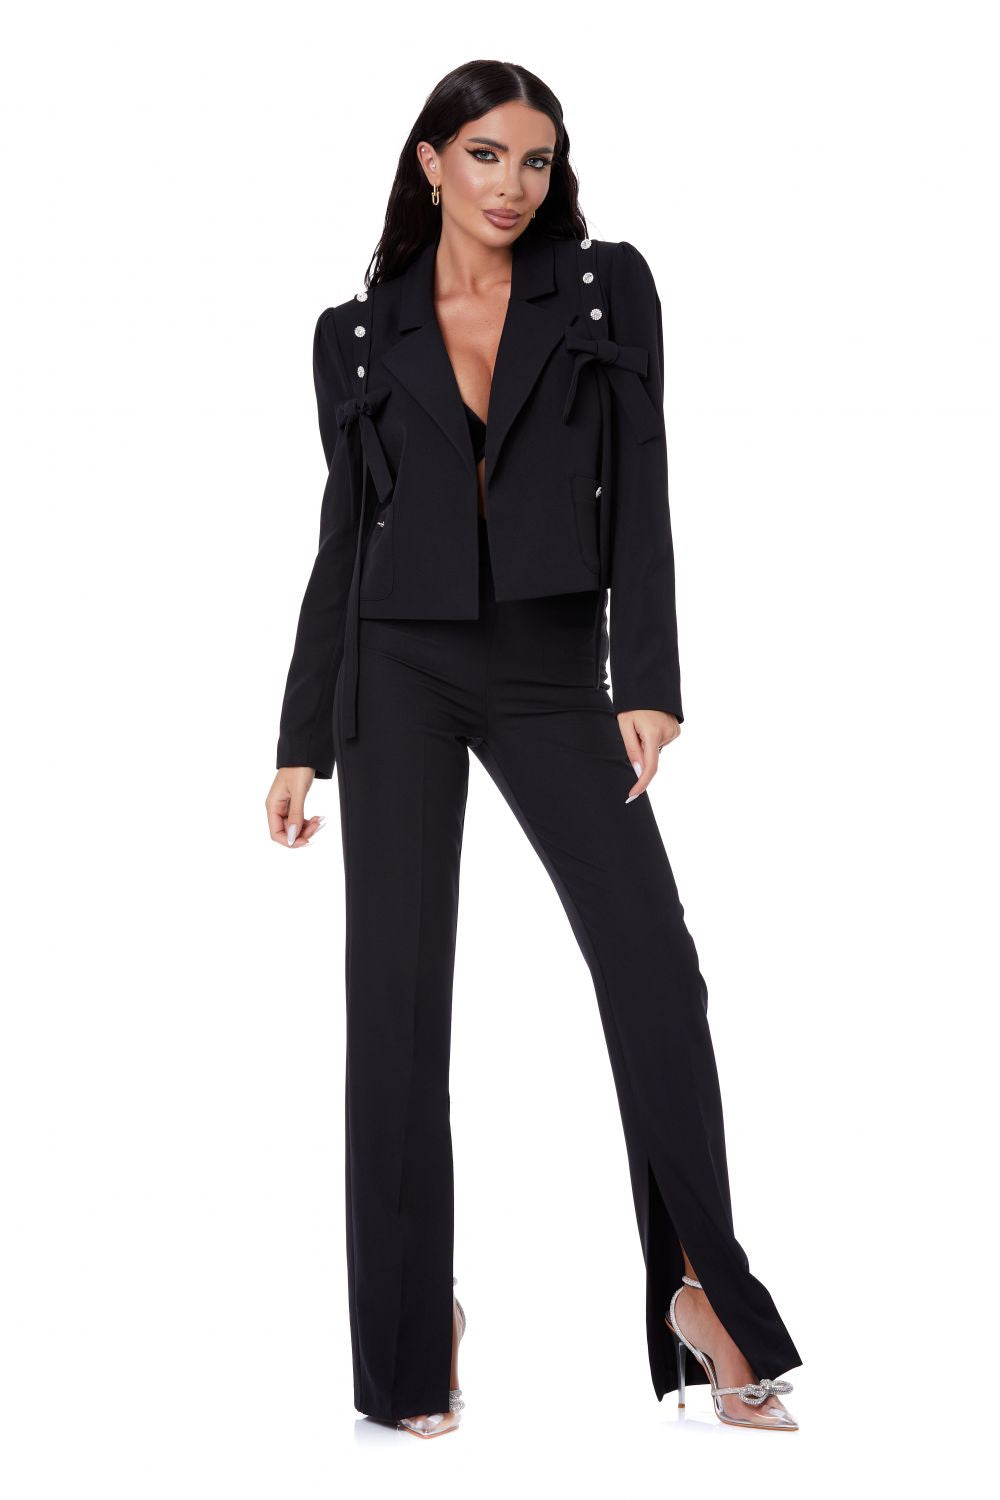 Black elegant women's suit Arnis Bogas